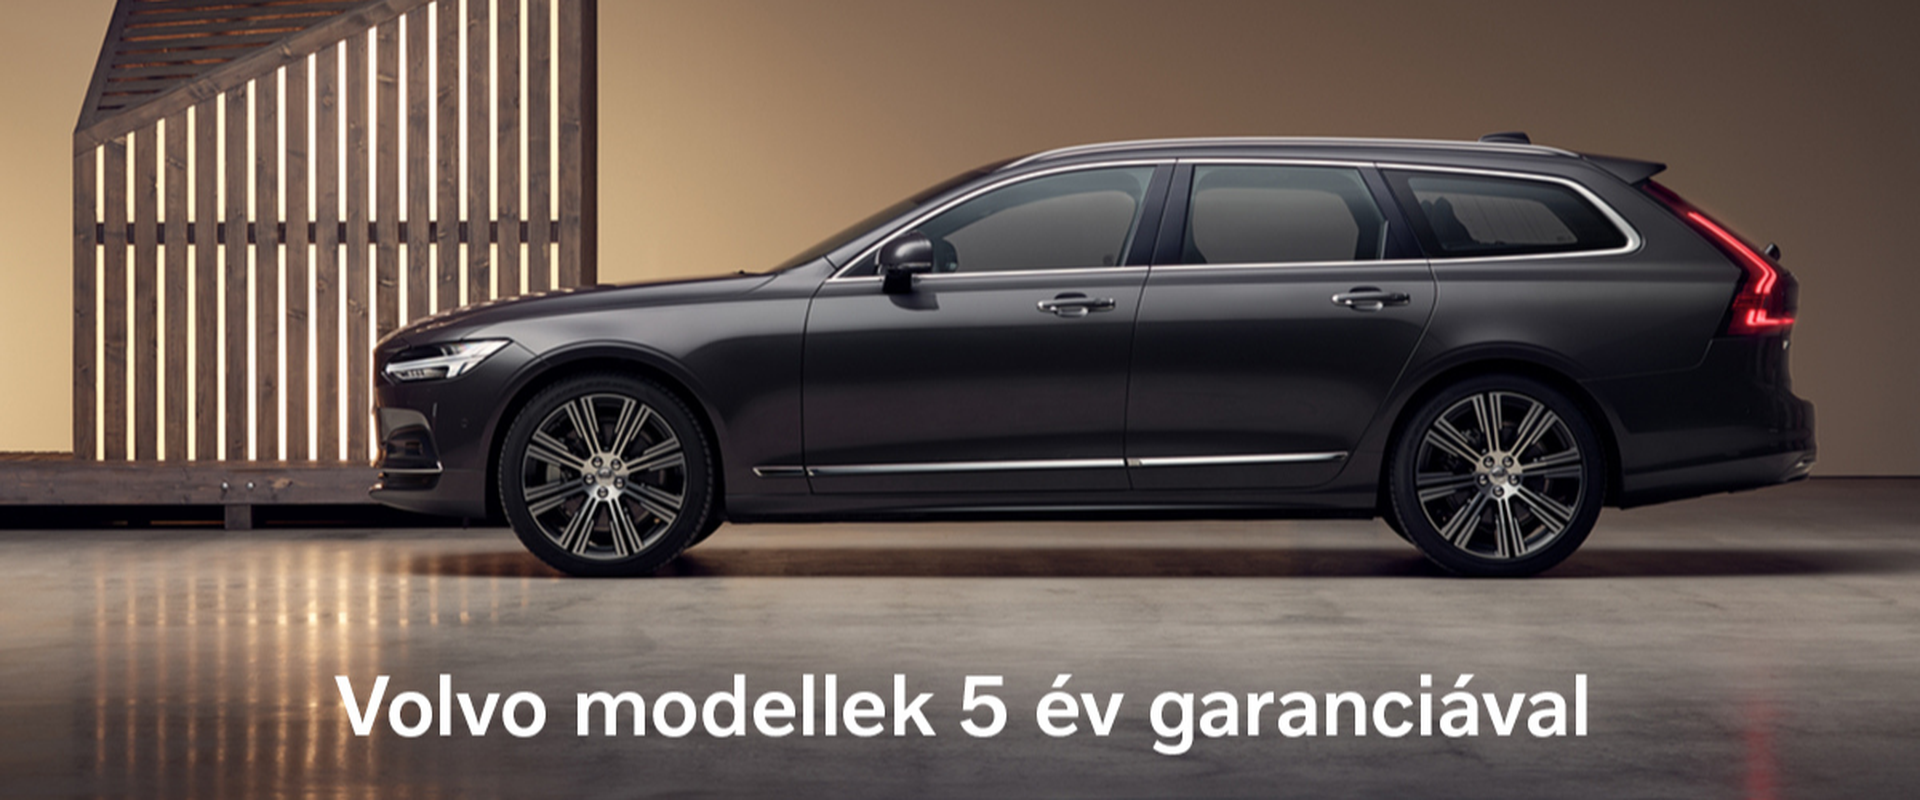 Volvo modellek 5 év garanciával!